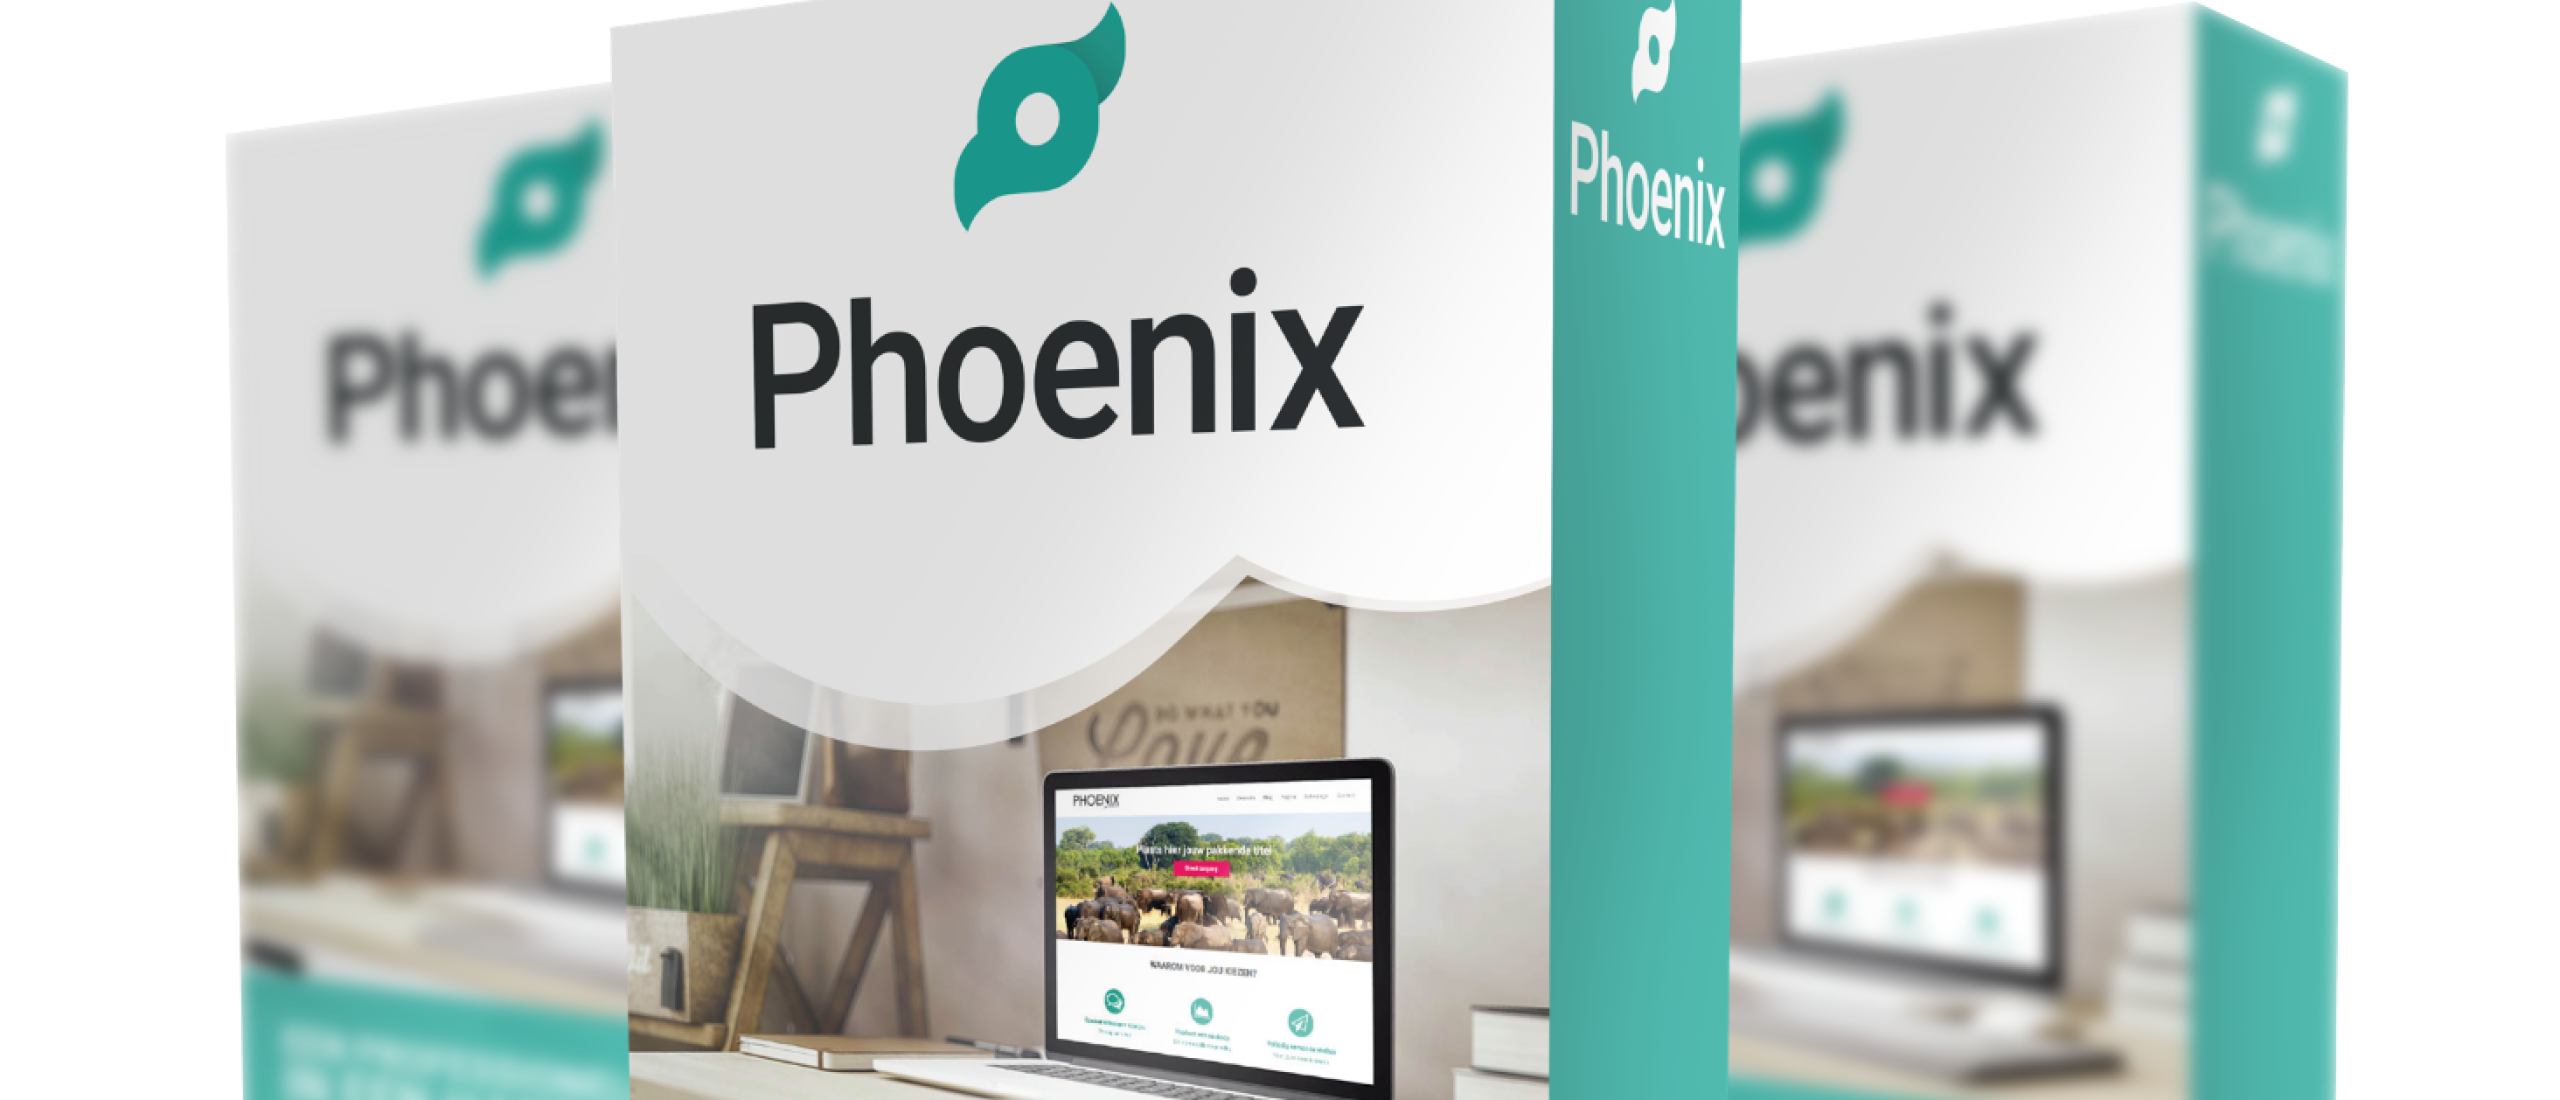 phoenix-software-review-seo-landingspagina-software